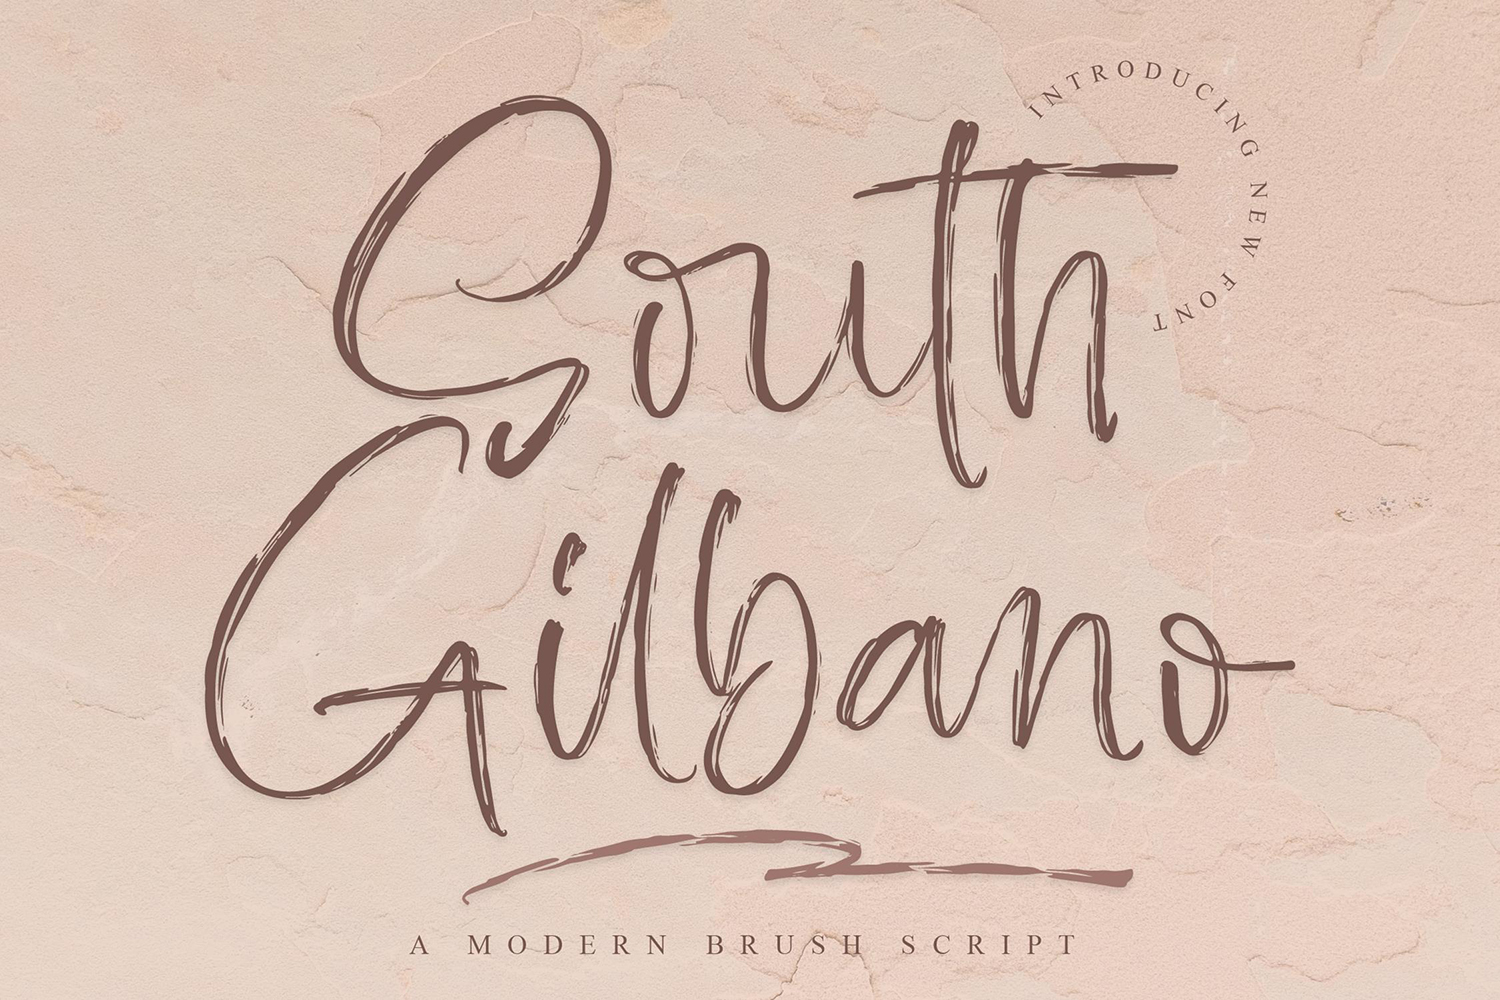 South Gilbano Free Font